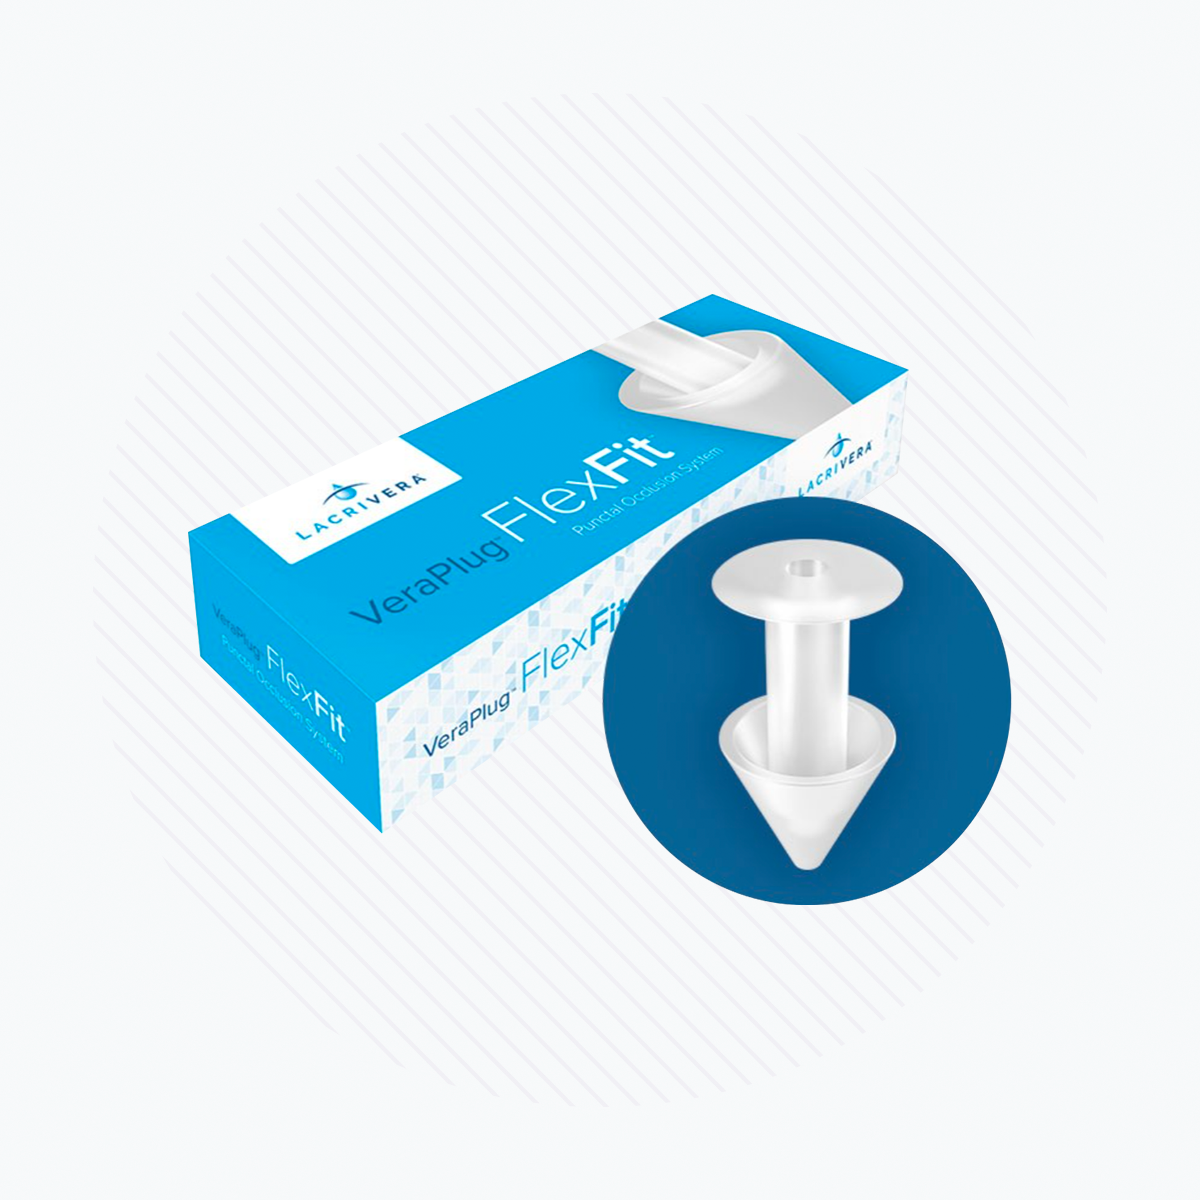 Lacrivera VeraPlug "FlexFit" Sterile Pre-loaded Punctal Occulders - 1 Pair Box